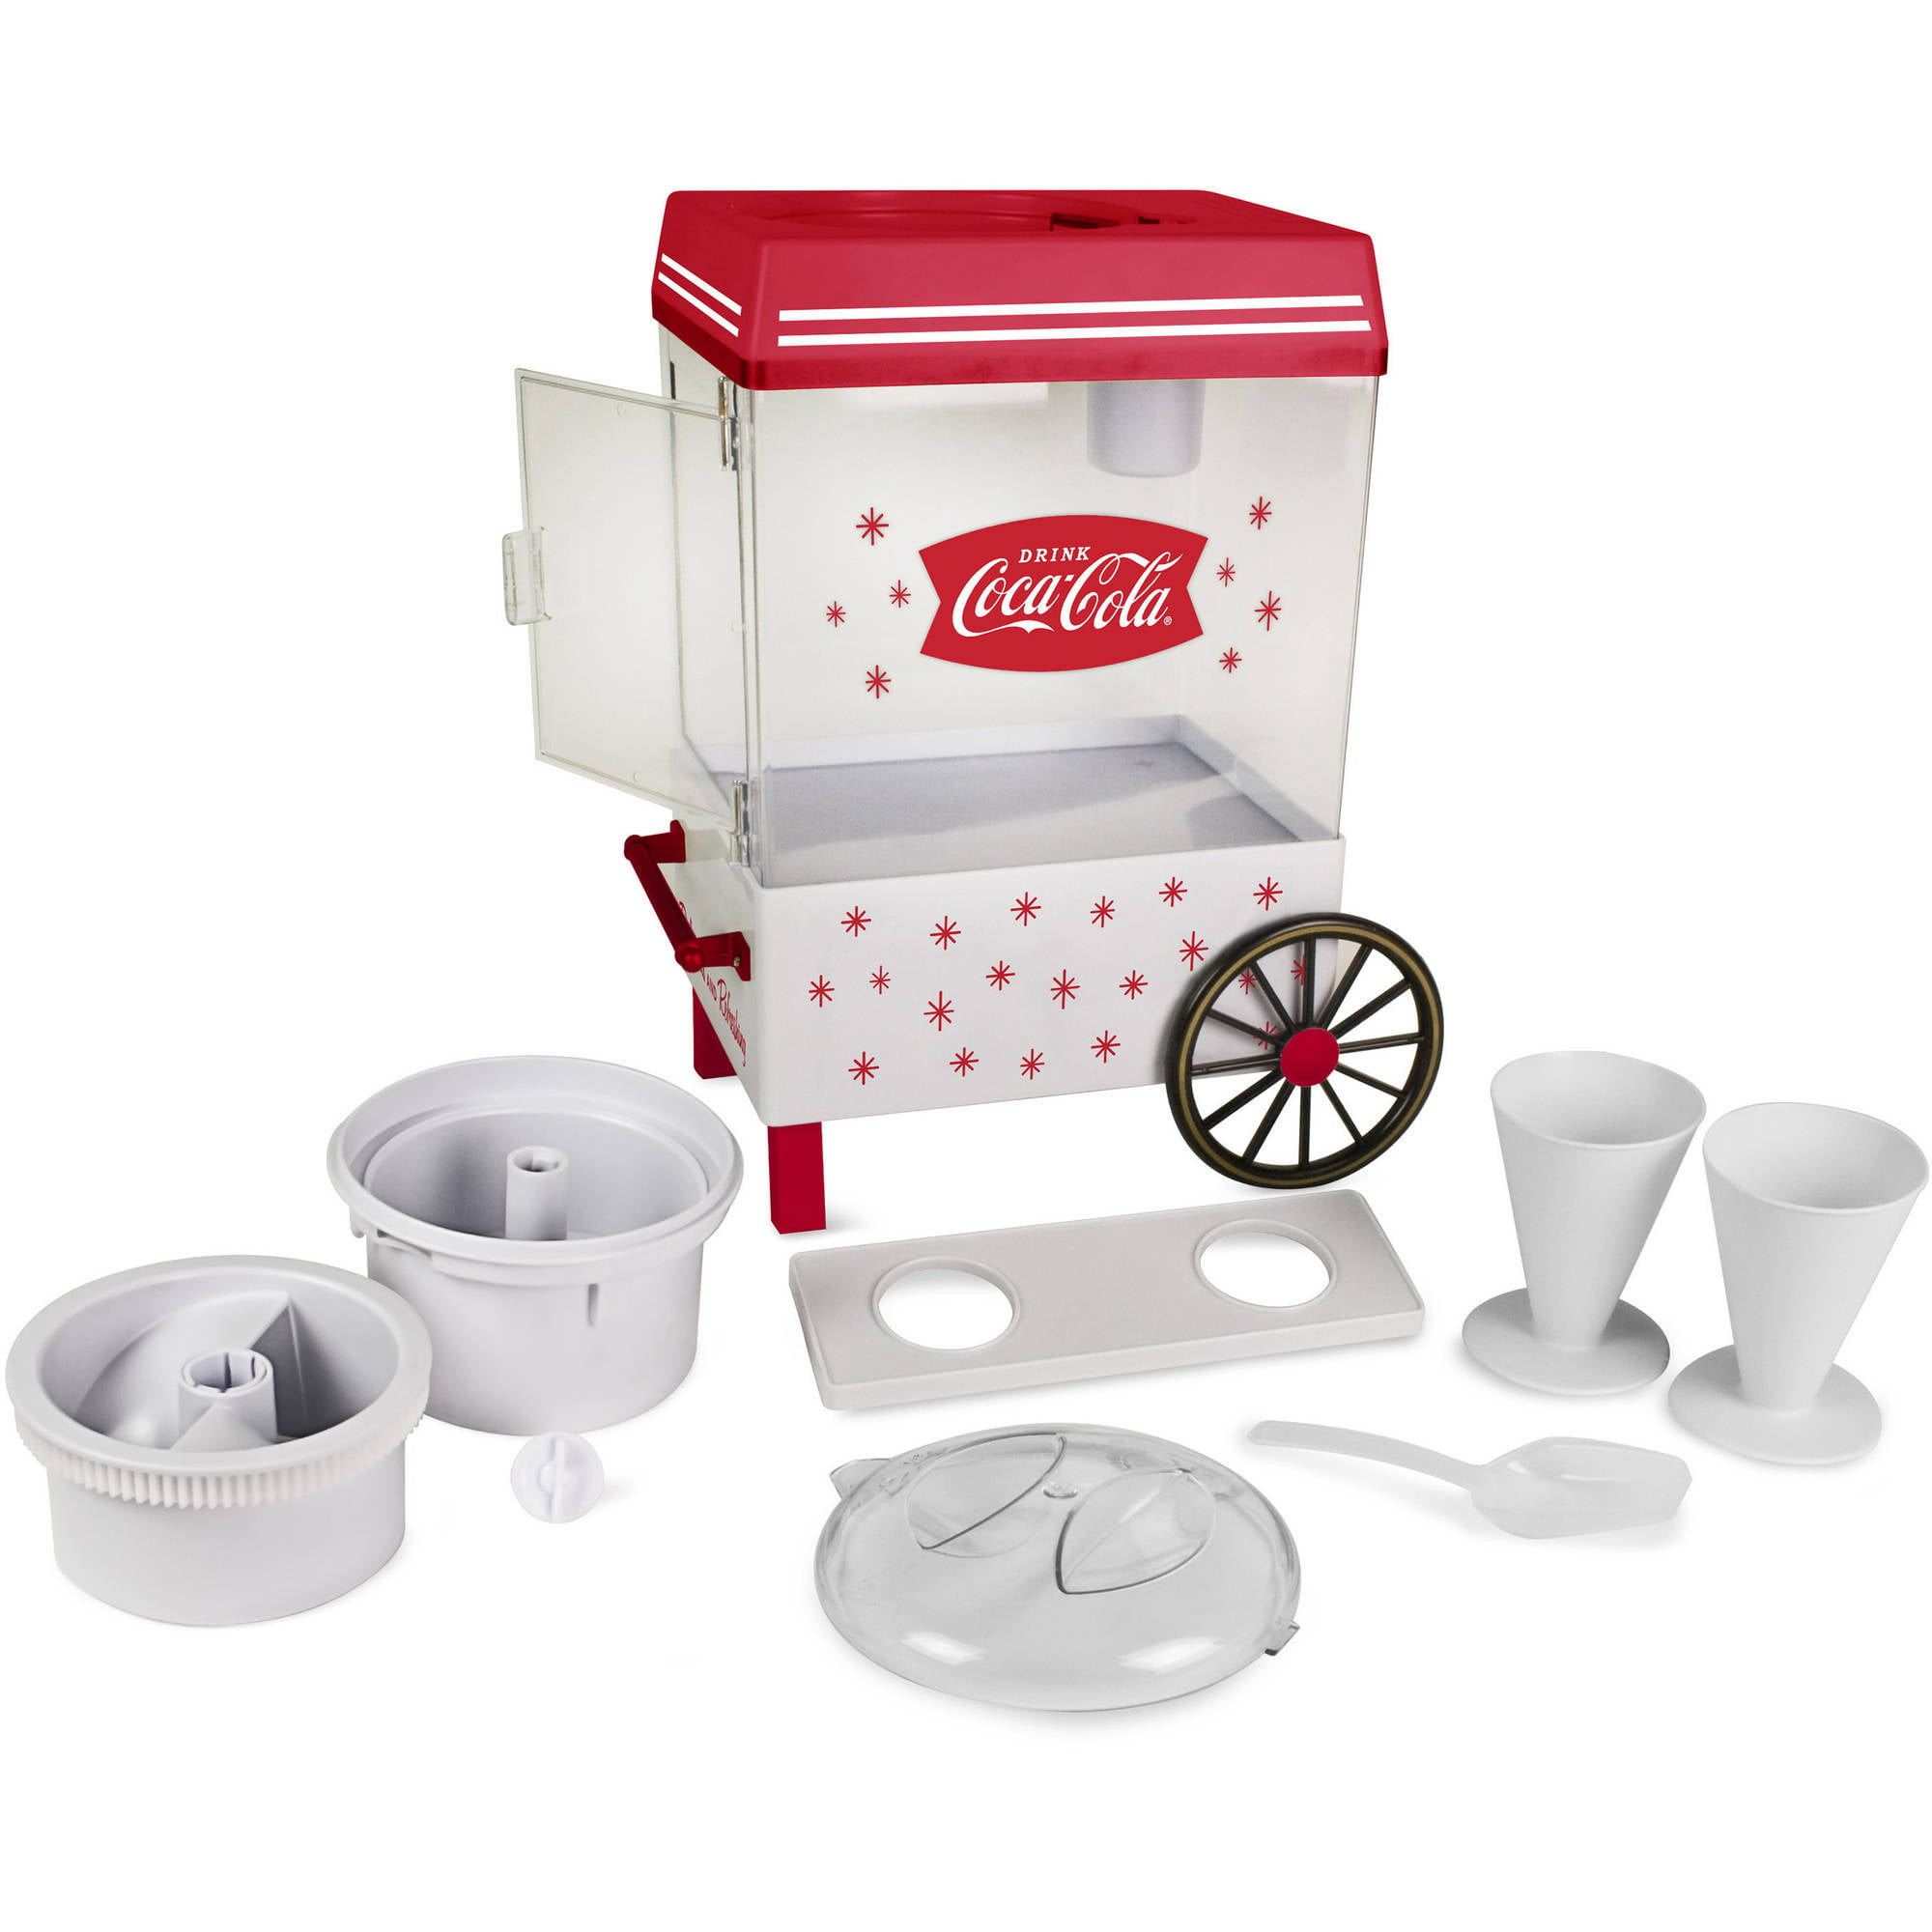 Includes 2 Reusable Plastic Cups & Ice Scoop White/Red NOSTALGIA SCM550COKE Coca-Cola Countertop Snow Cone Maker Makes 20 ICY Treats 